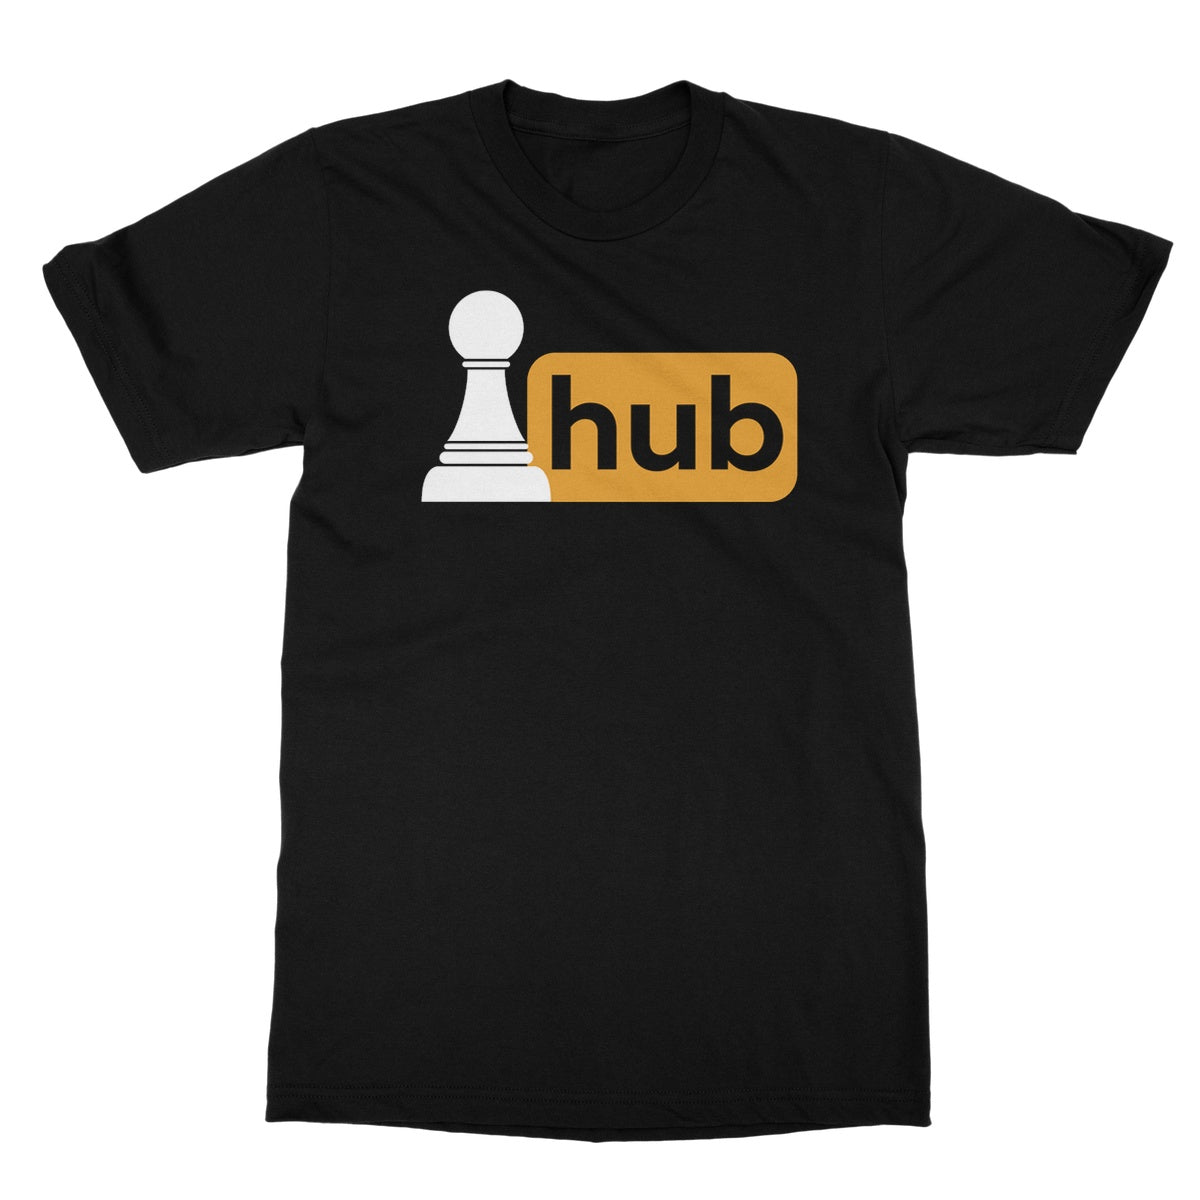 pawn hub t shirt black